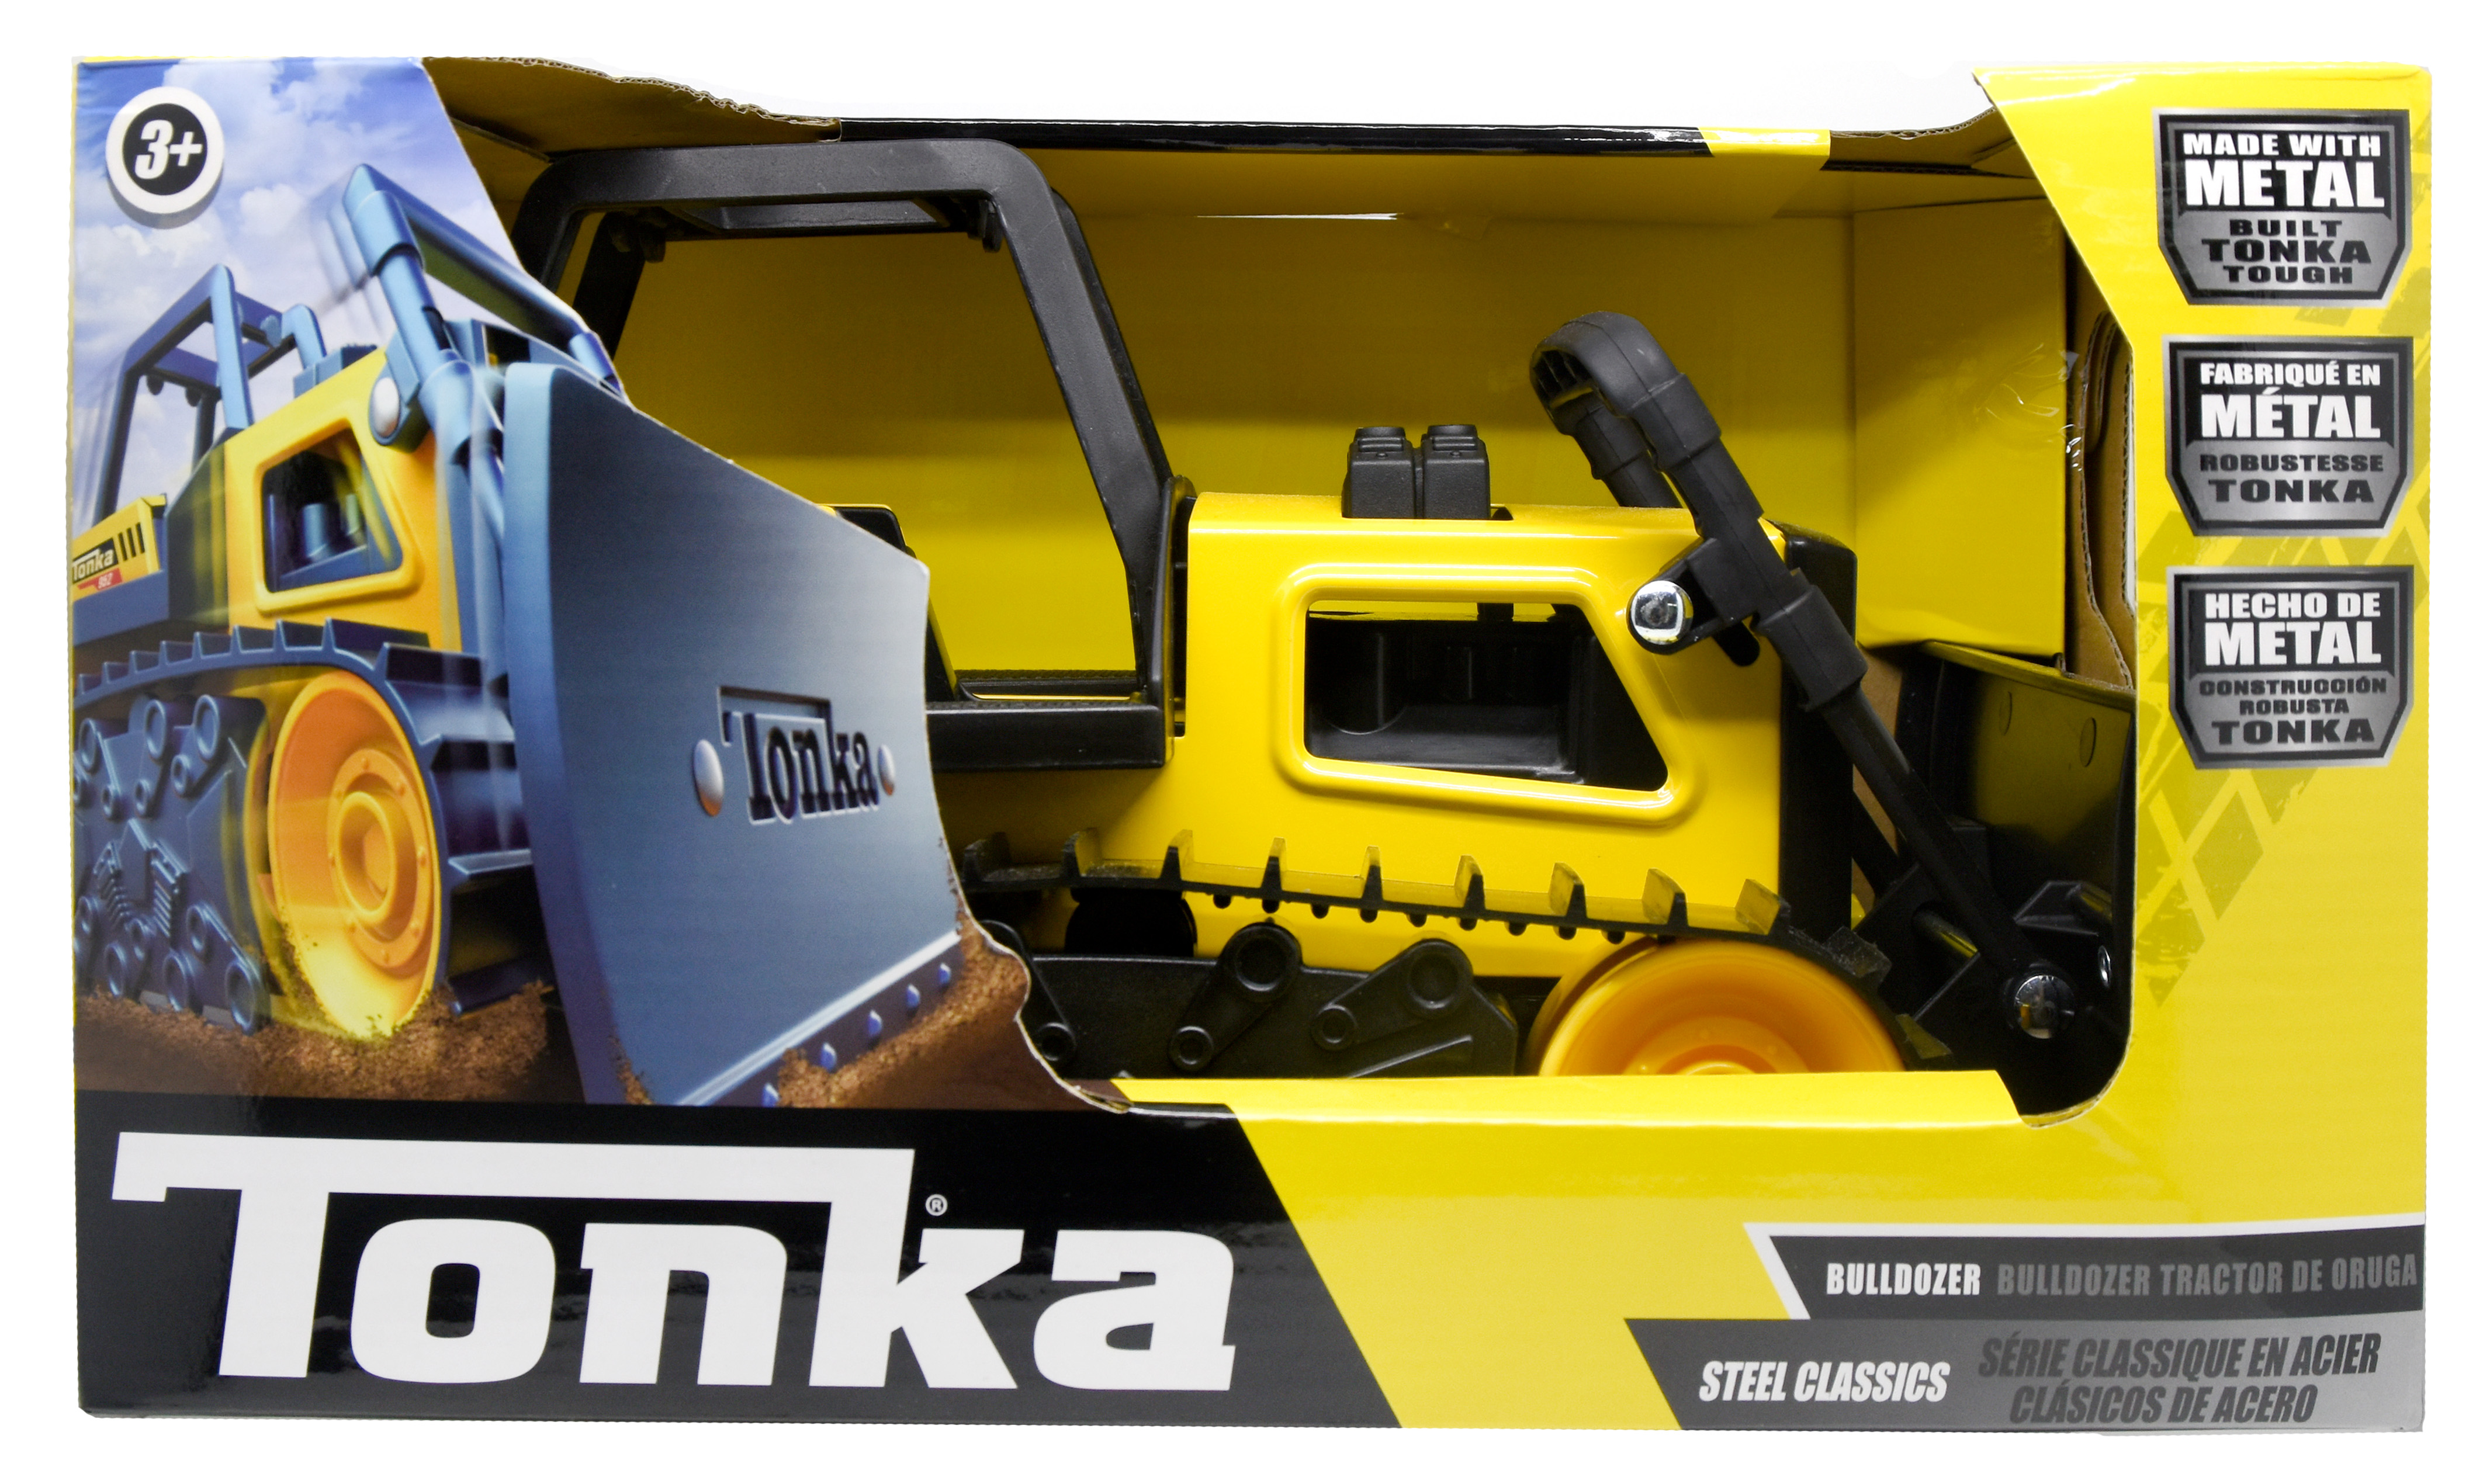 Tonka - Steel Classics Bull Dozer รถเหล็ก ก่อสร้าง ทองก้า - คลาสสิค บลู โดเซอร์ แทรกเตอร์เกลี่ยดิน รถของเล่น รถเด็กเล่น